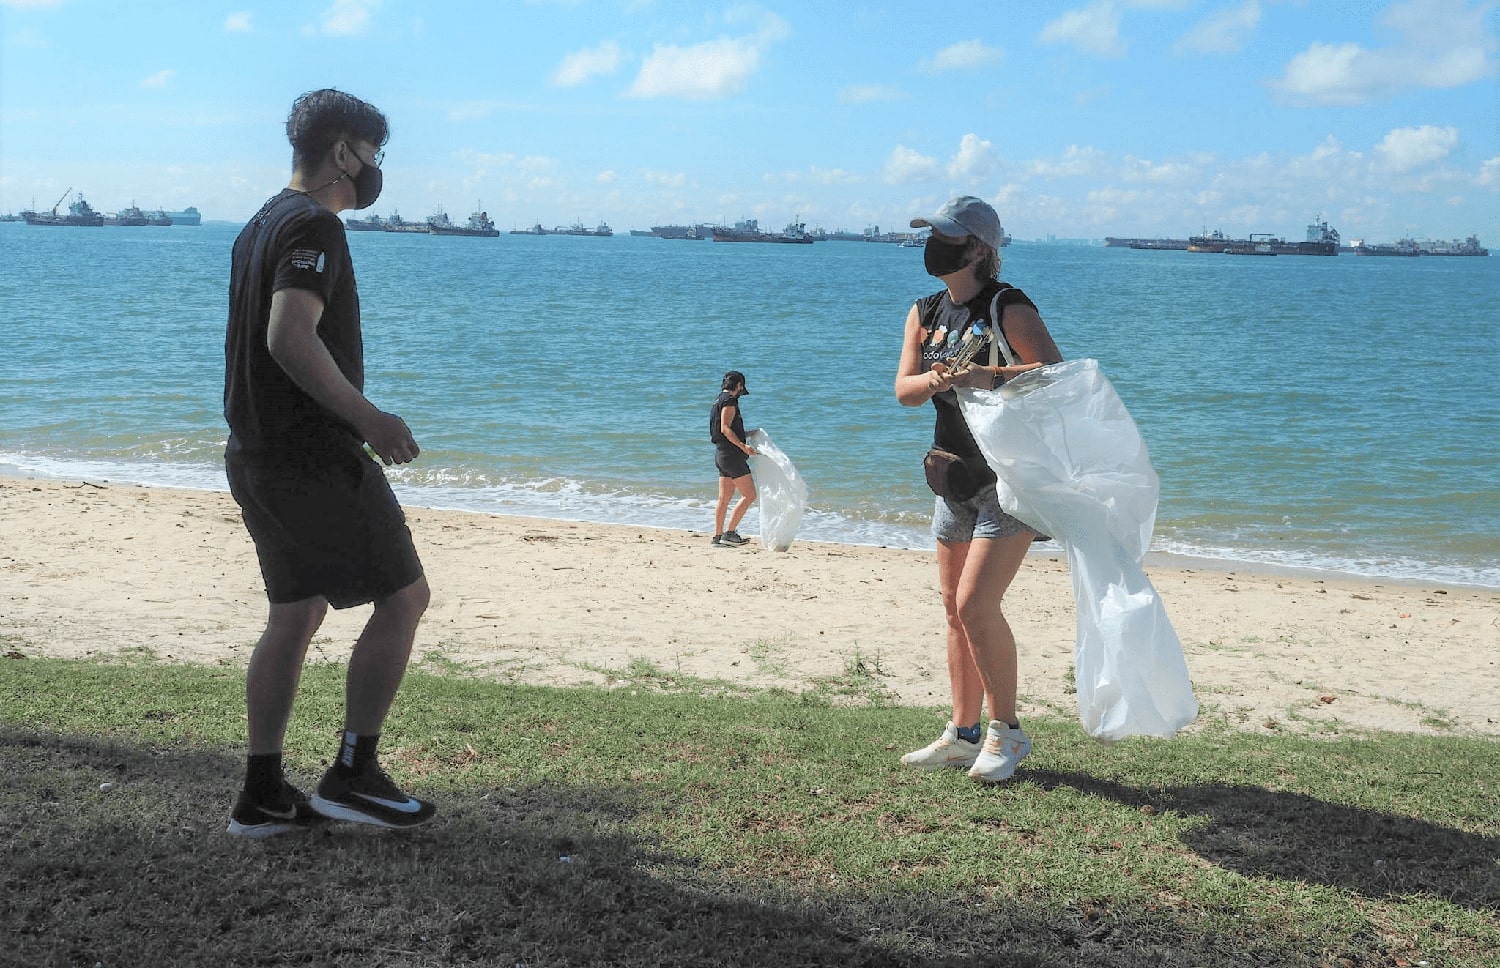 Beach cleanup in Singapore